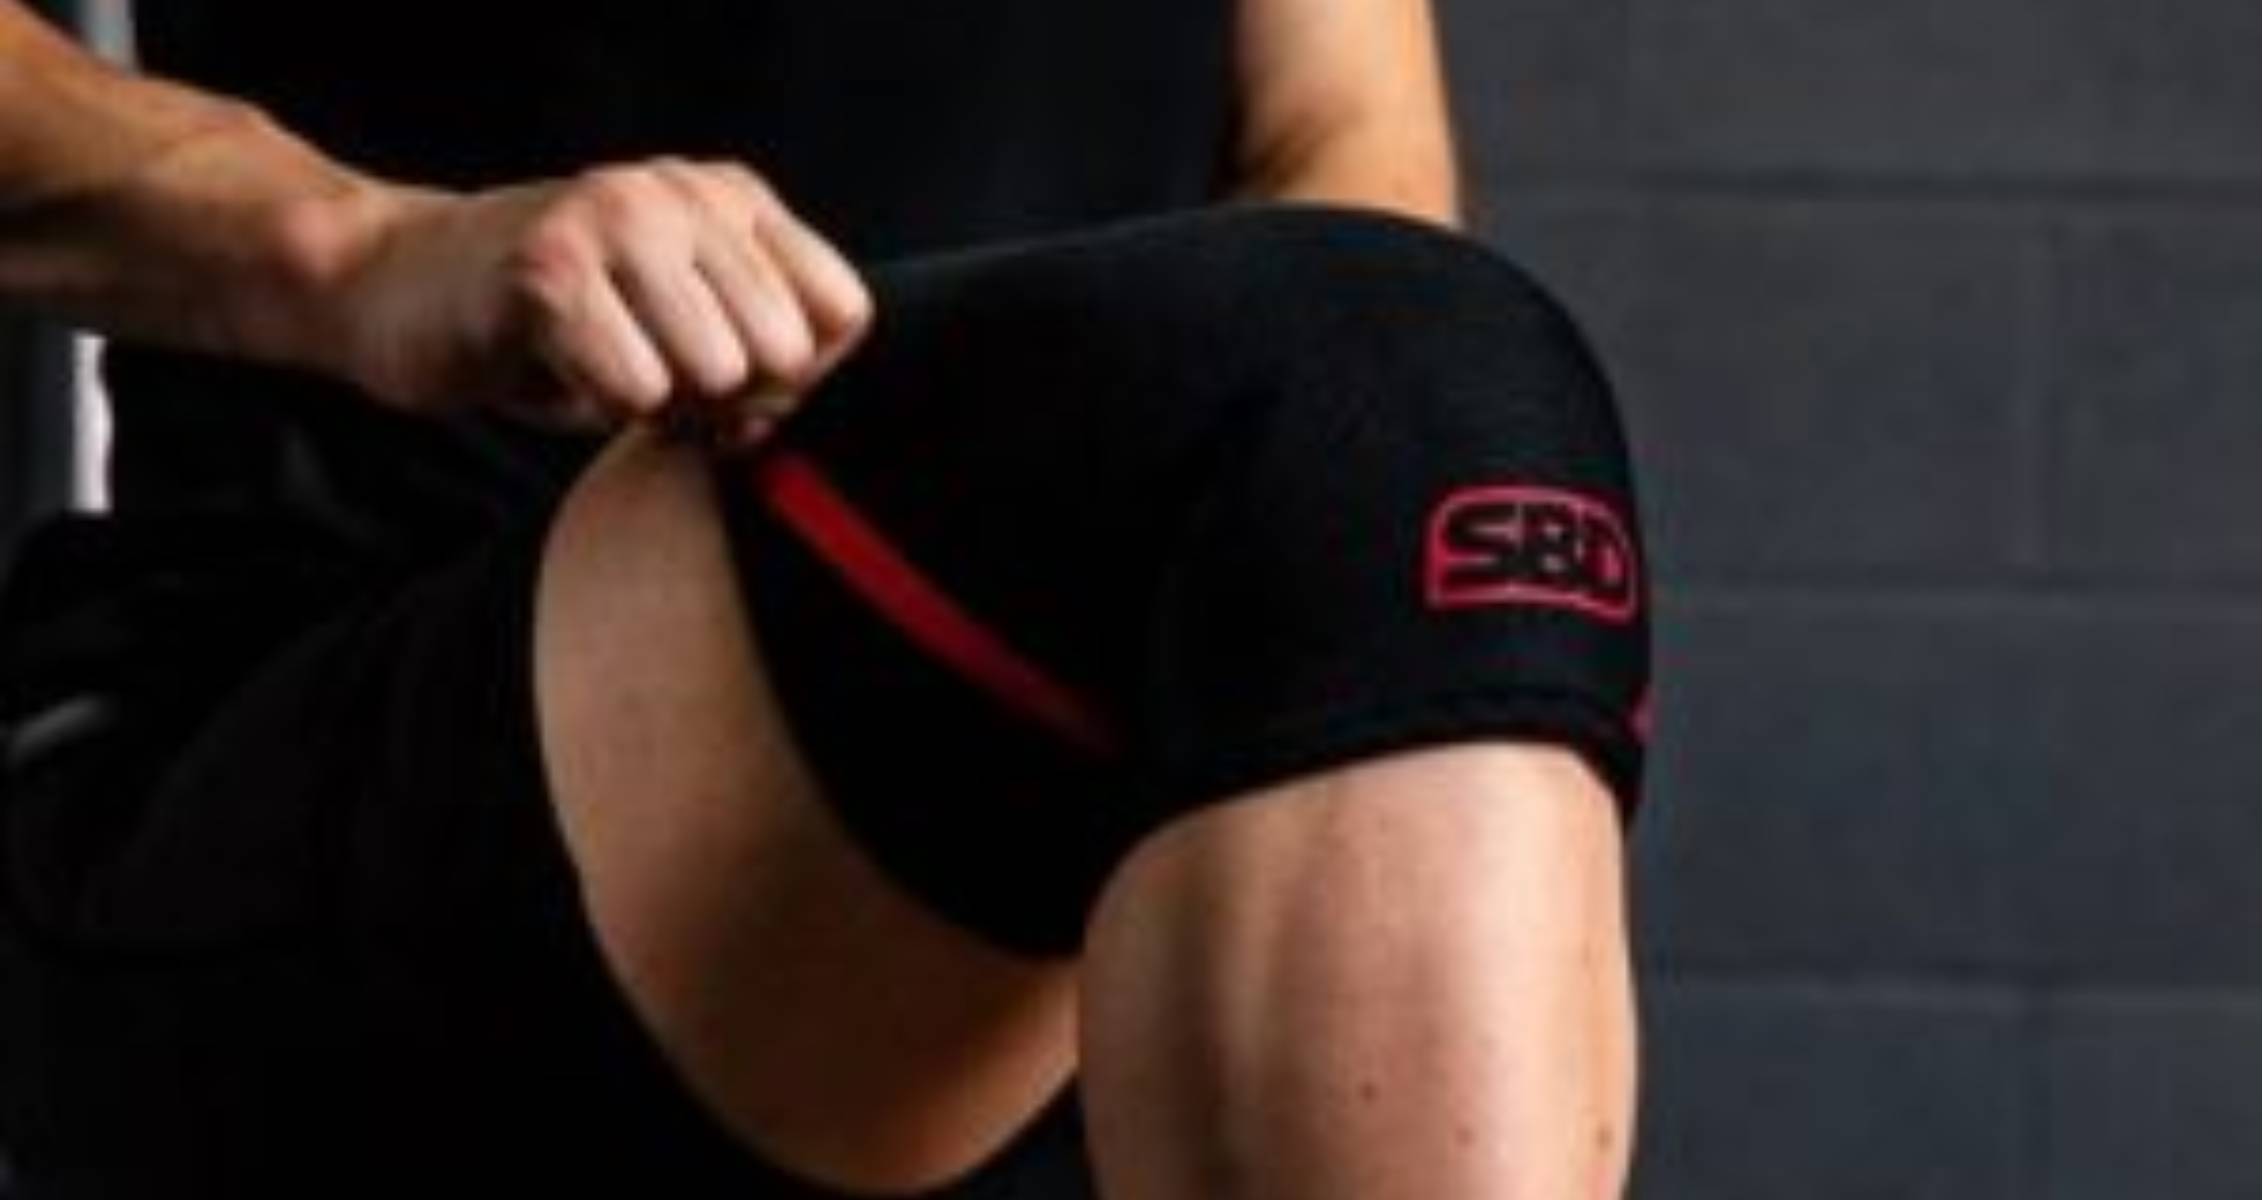 SBD Knee Sleeves Vs. Rogue Knee Sleeves - Generation Iron Fitness